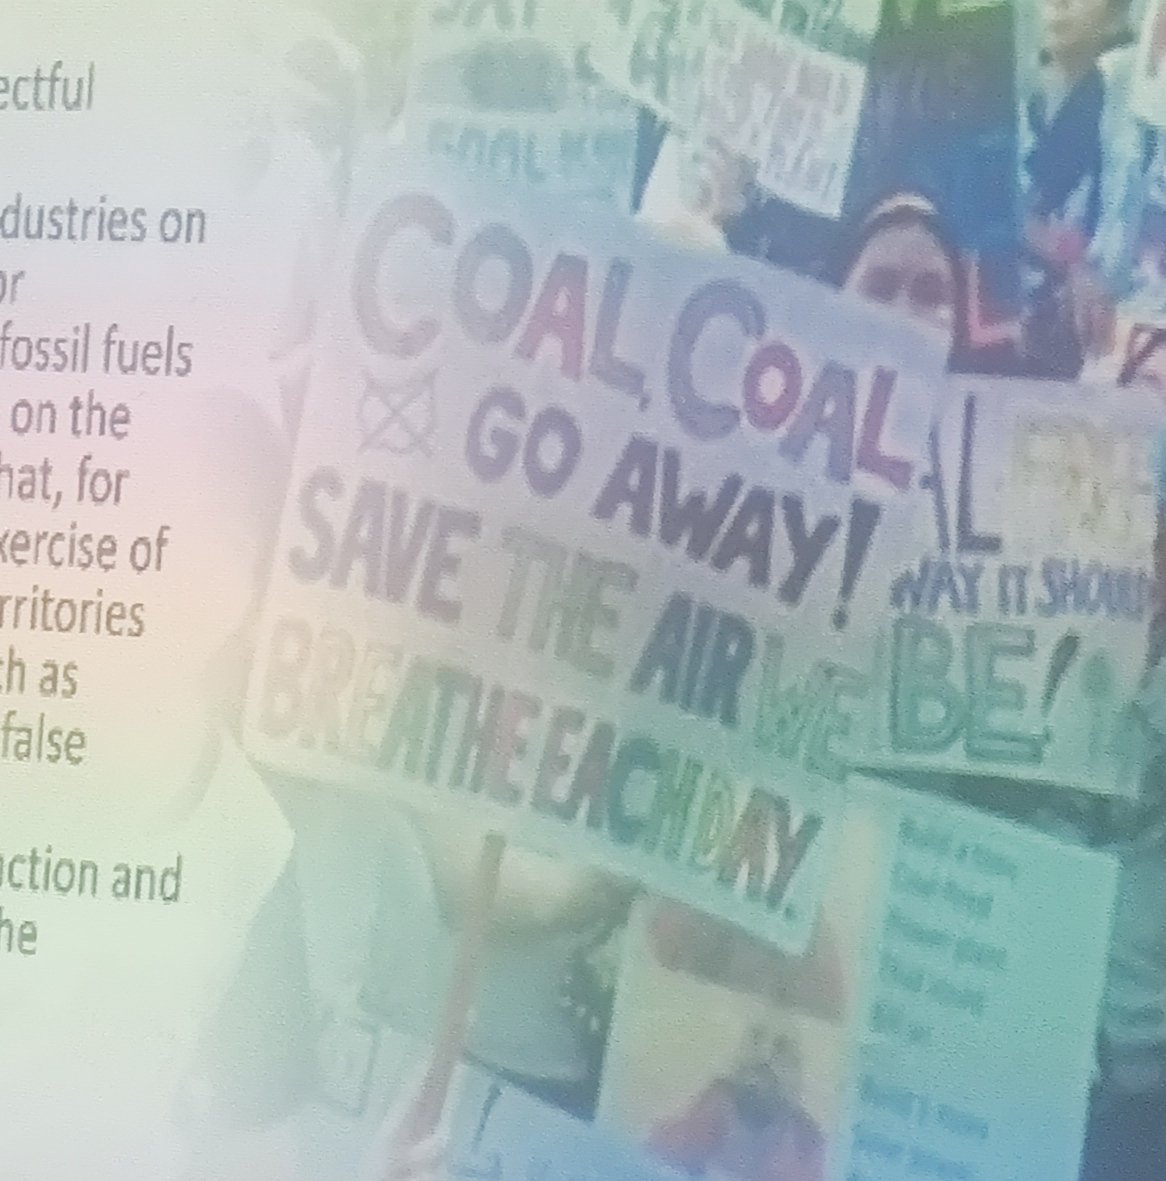 Coal is part of the problem. Leave it in the ground. - Enteng Bautista

#OilWatchGlobalGathering 
#JustEnergyTransition 
#RealZeroNotNetZero
#NoToFalseSolutions